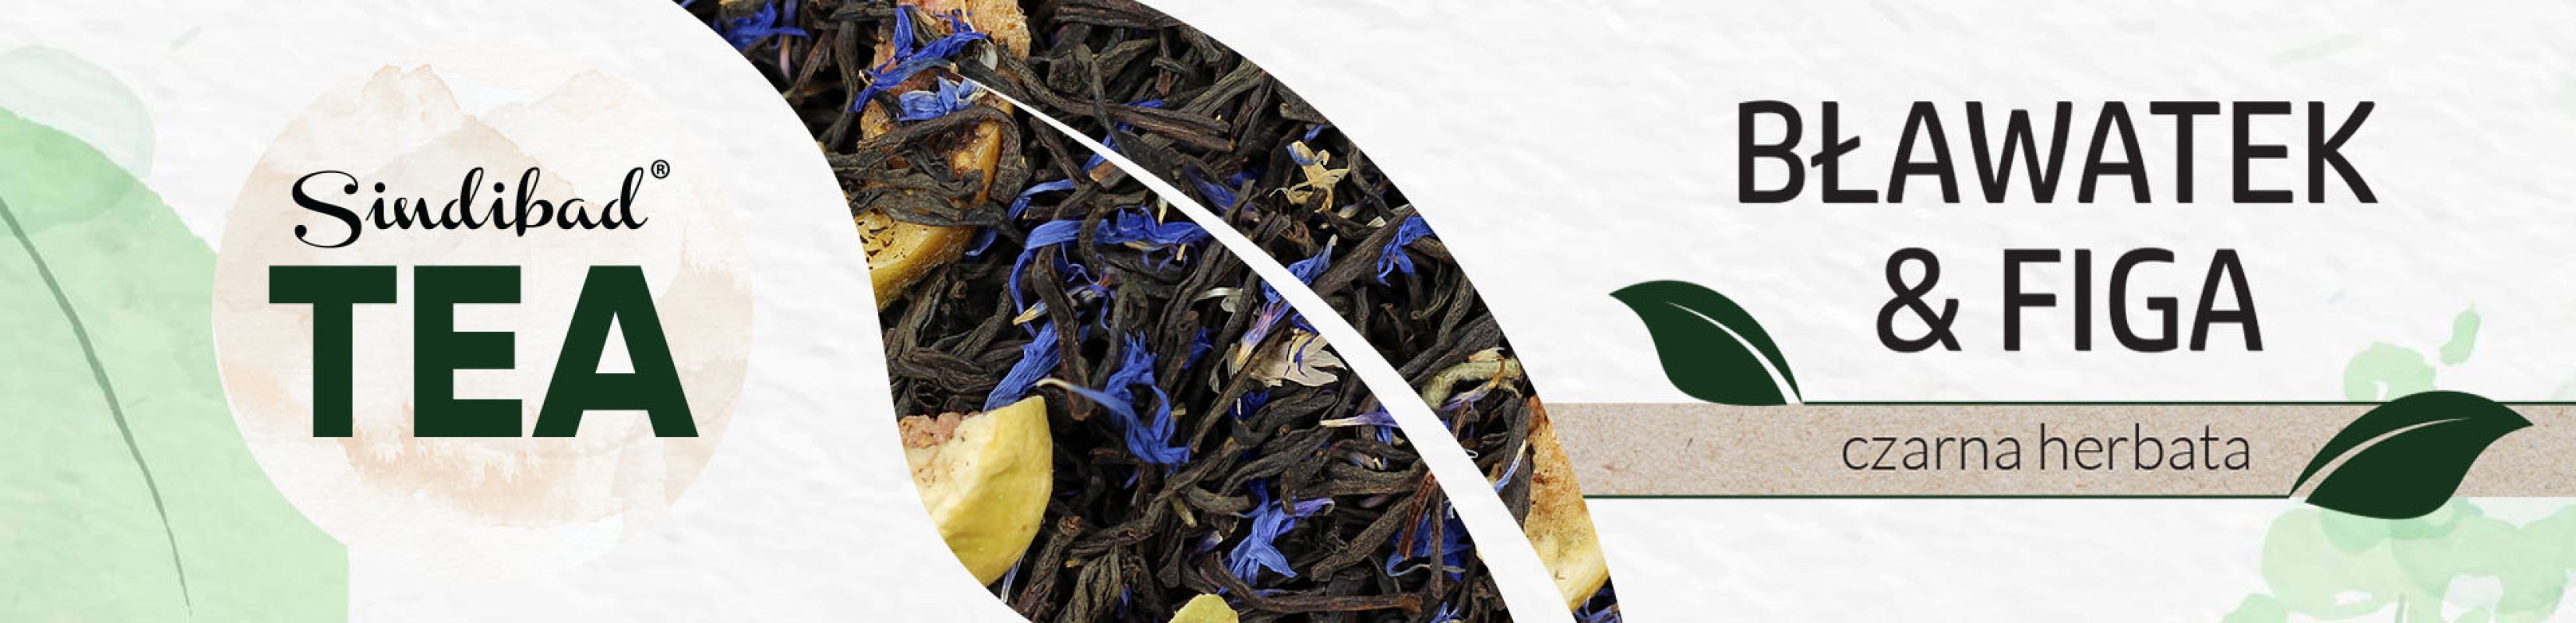 blawatek i figa czarna herbata Sindibad 4